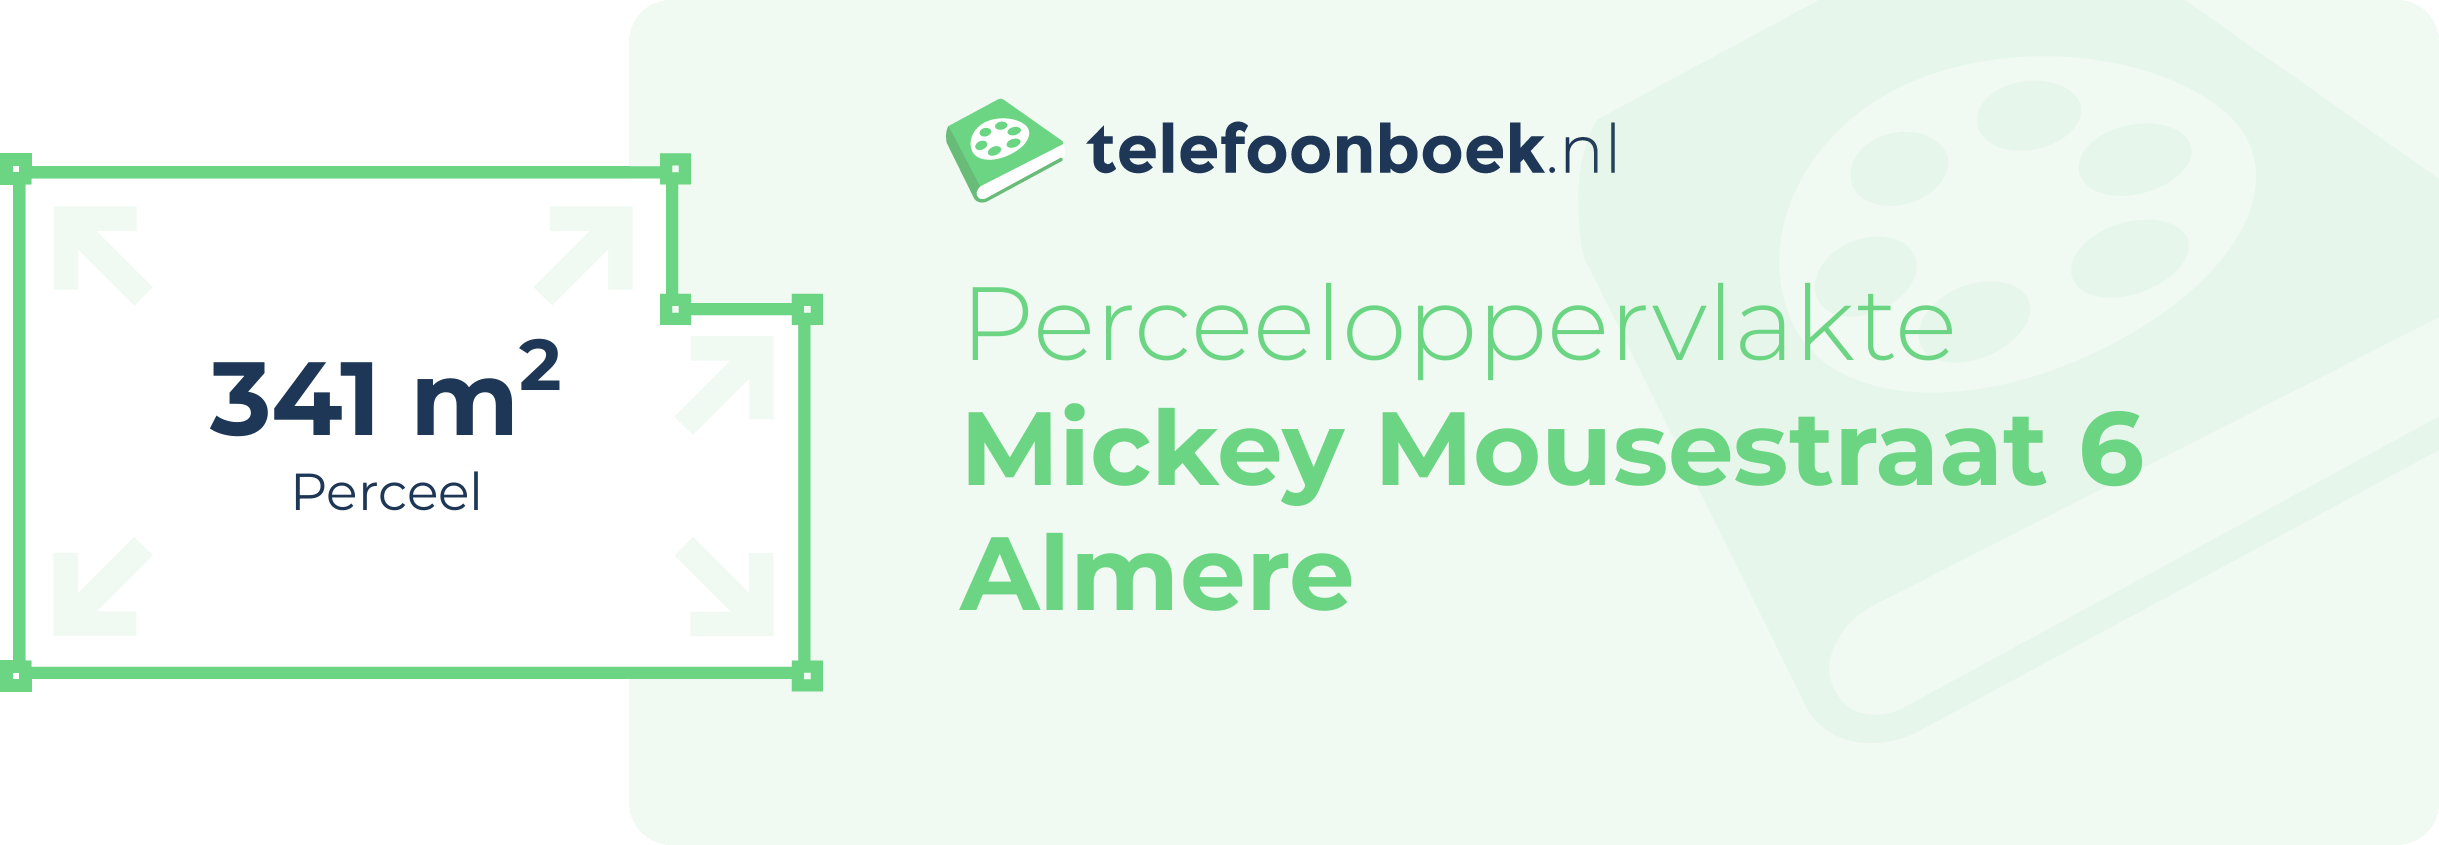 Perceeloppervlakte Mickey Mousestraat 6 Almere